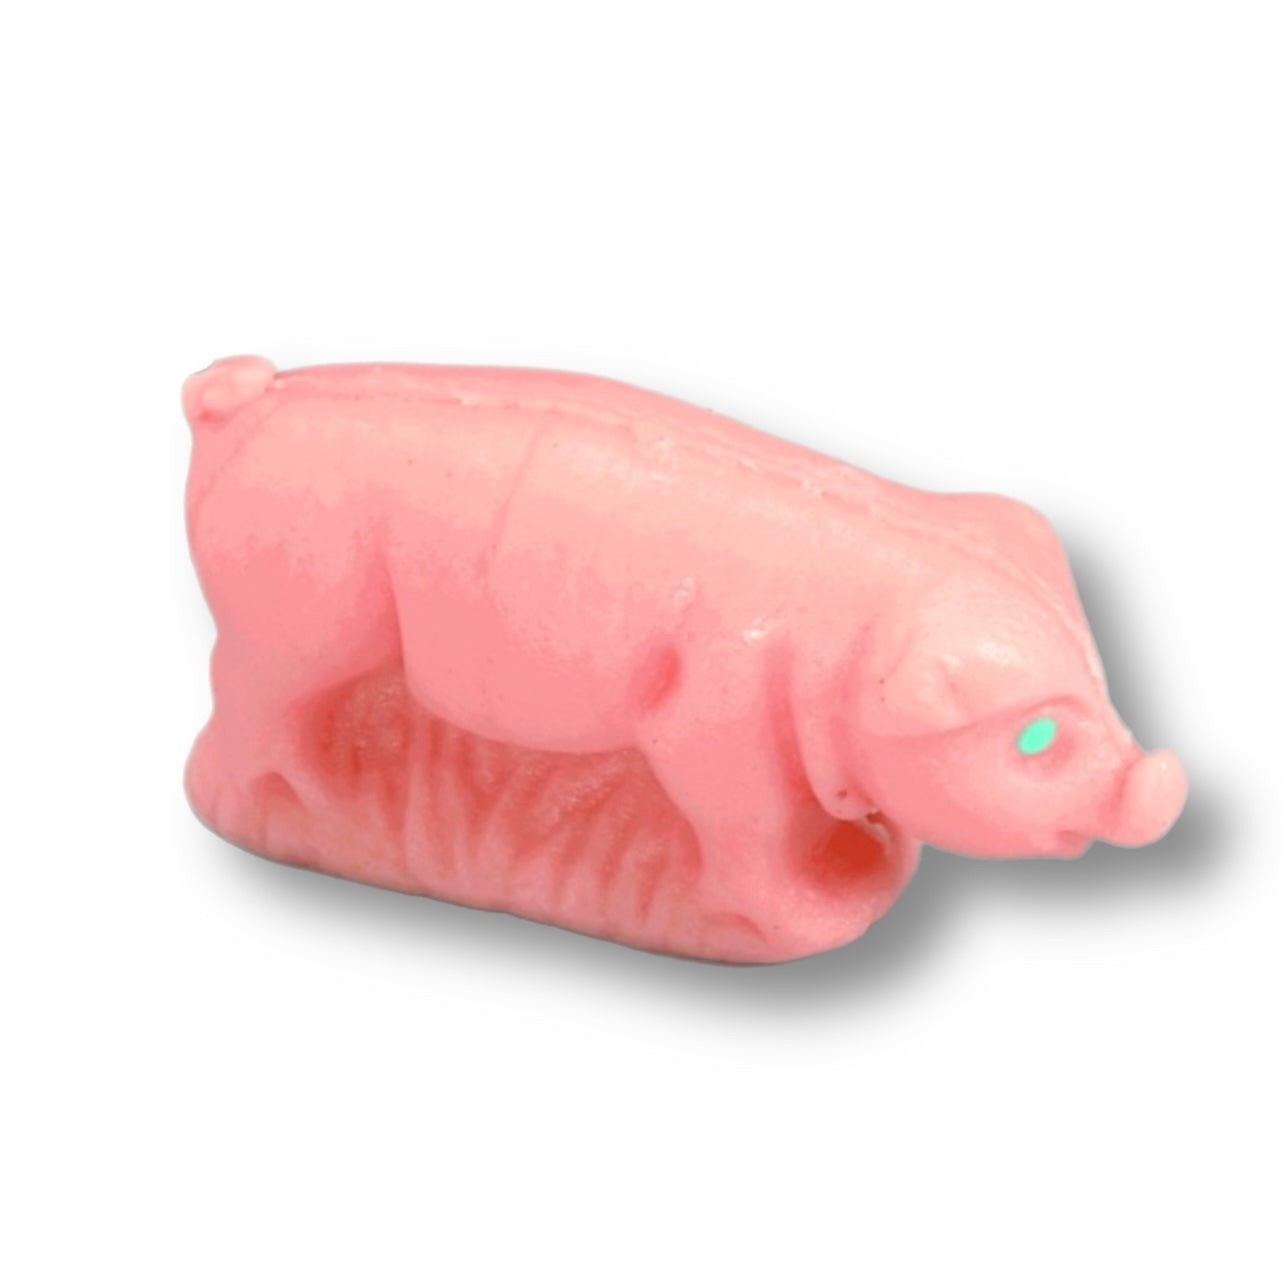 Marzipan shaped pig